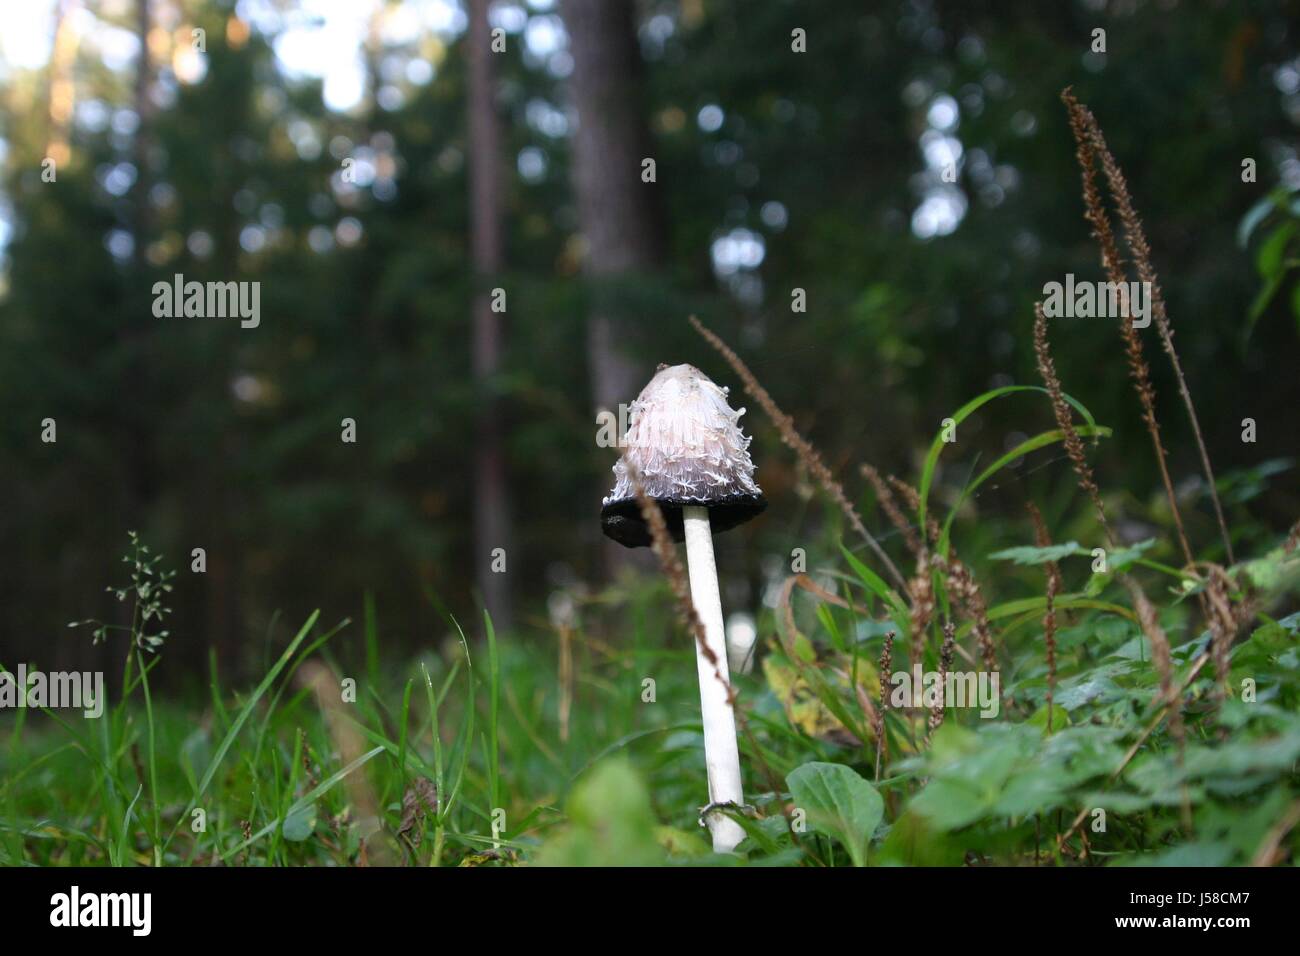 kurzbeschreibung bschelig wachsender grau-brunlicher pilz mit faltigem hutrand Stock Photo